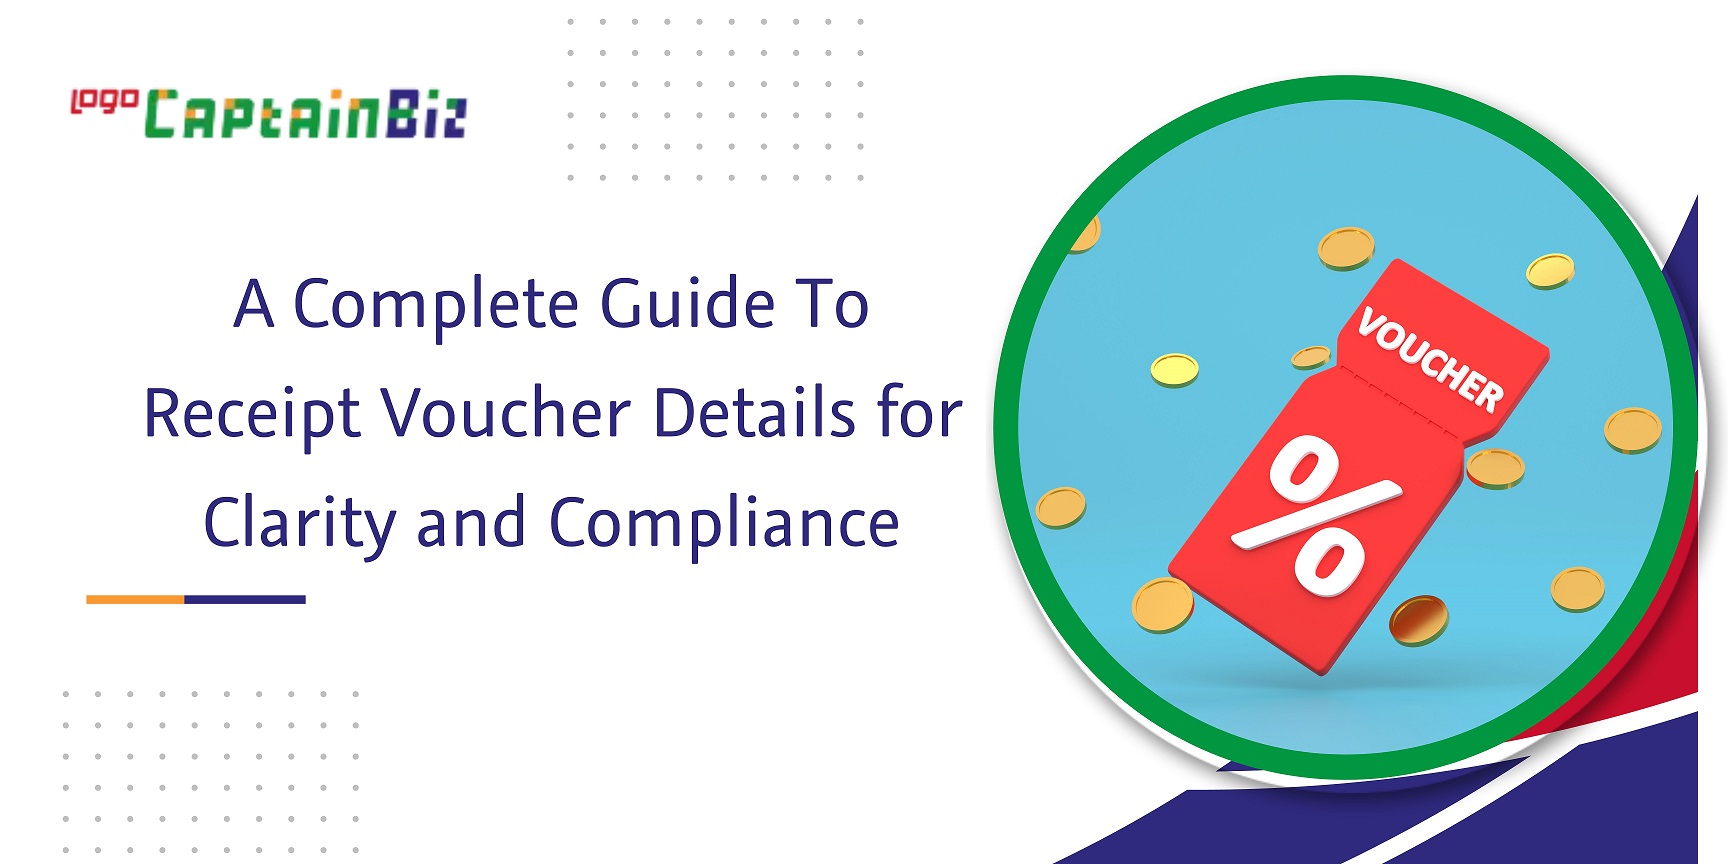 CaptainBiz: a complete guide to receipt voucher details for clarity and compliance